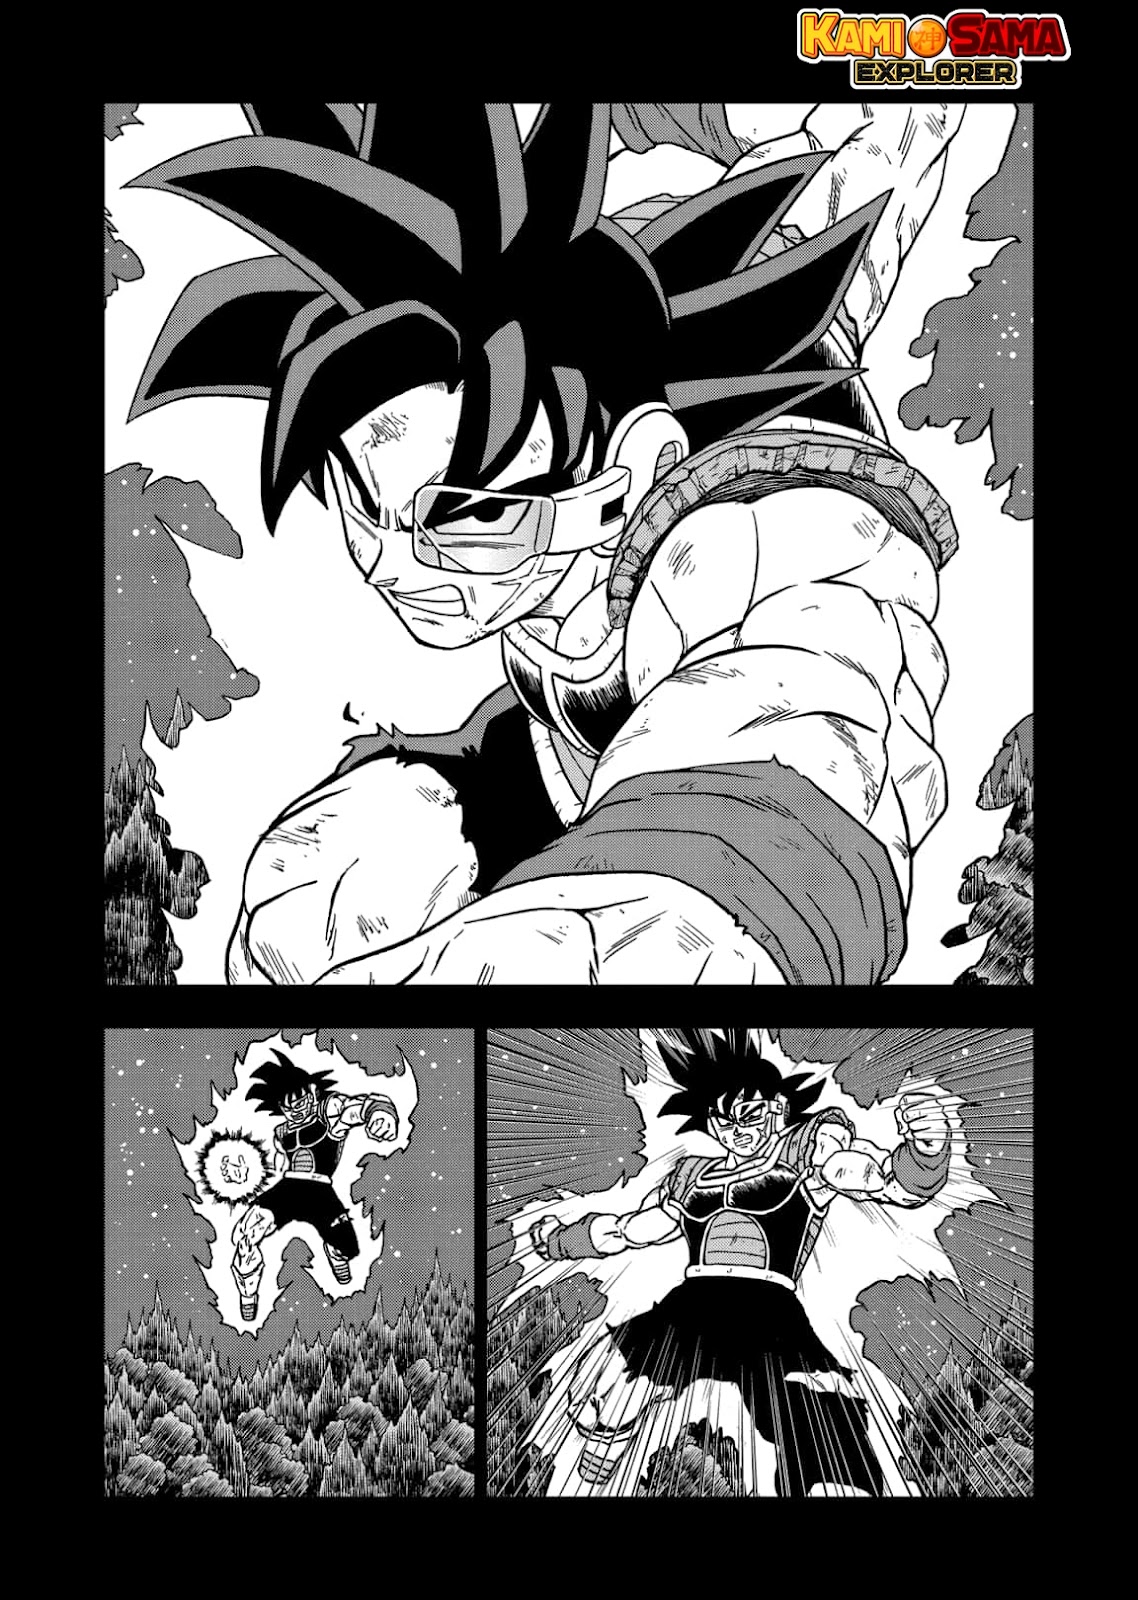 Dragon Ball Super Capítulo 80 - Manga Online